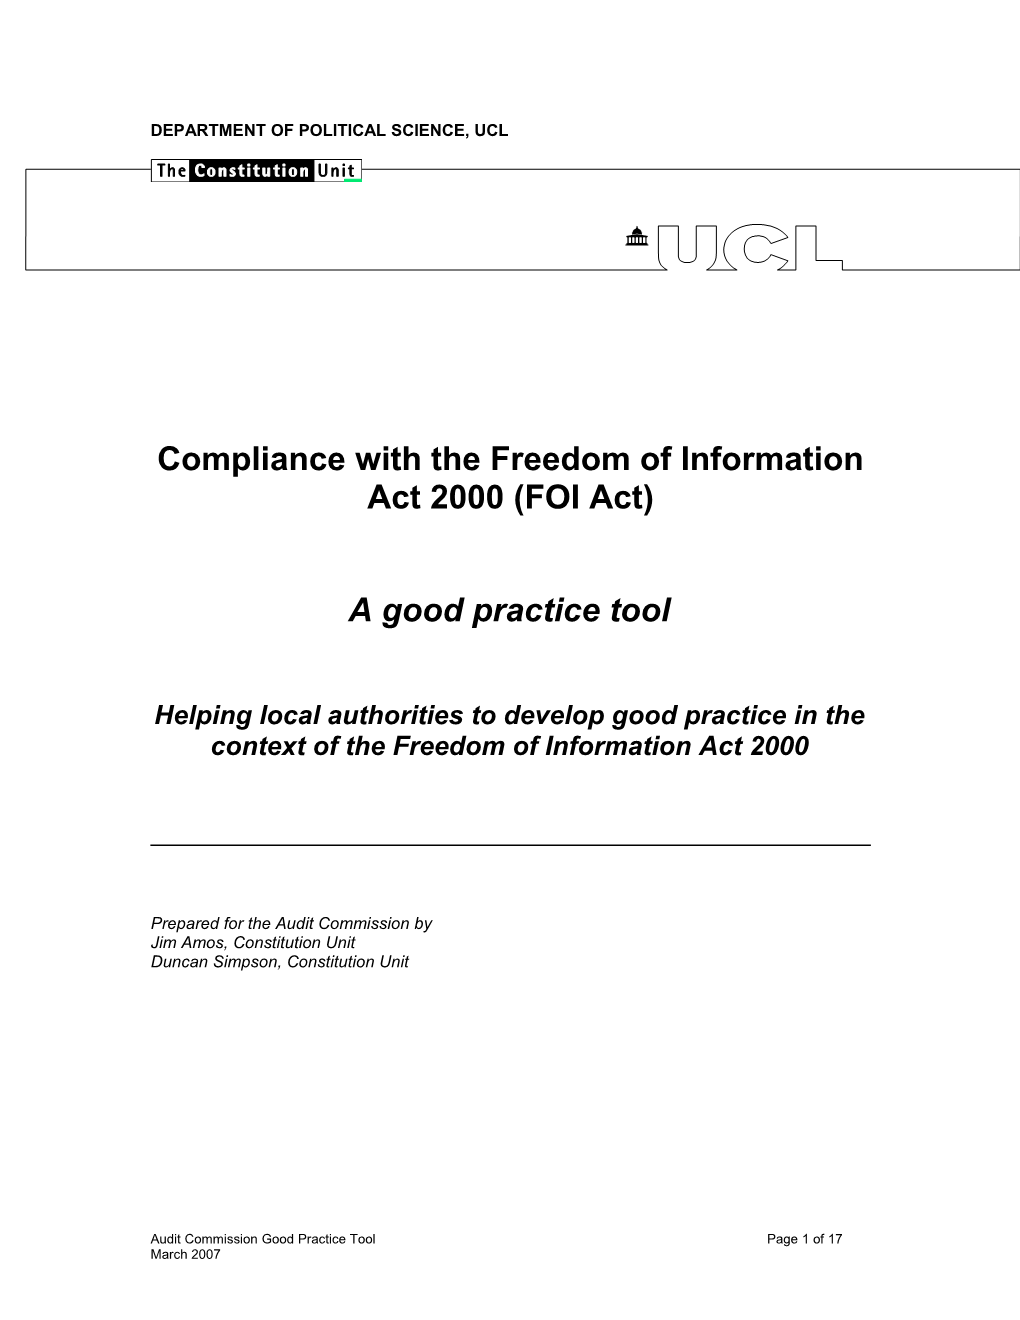 Audit Commission Good Practice Tool